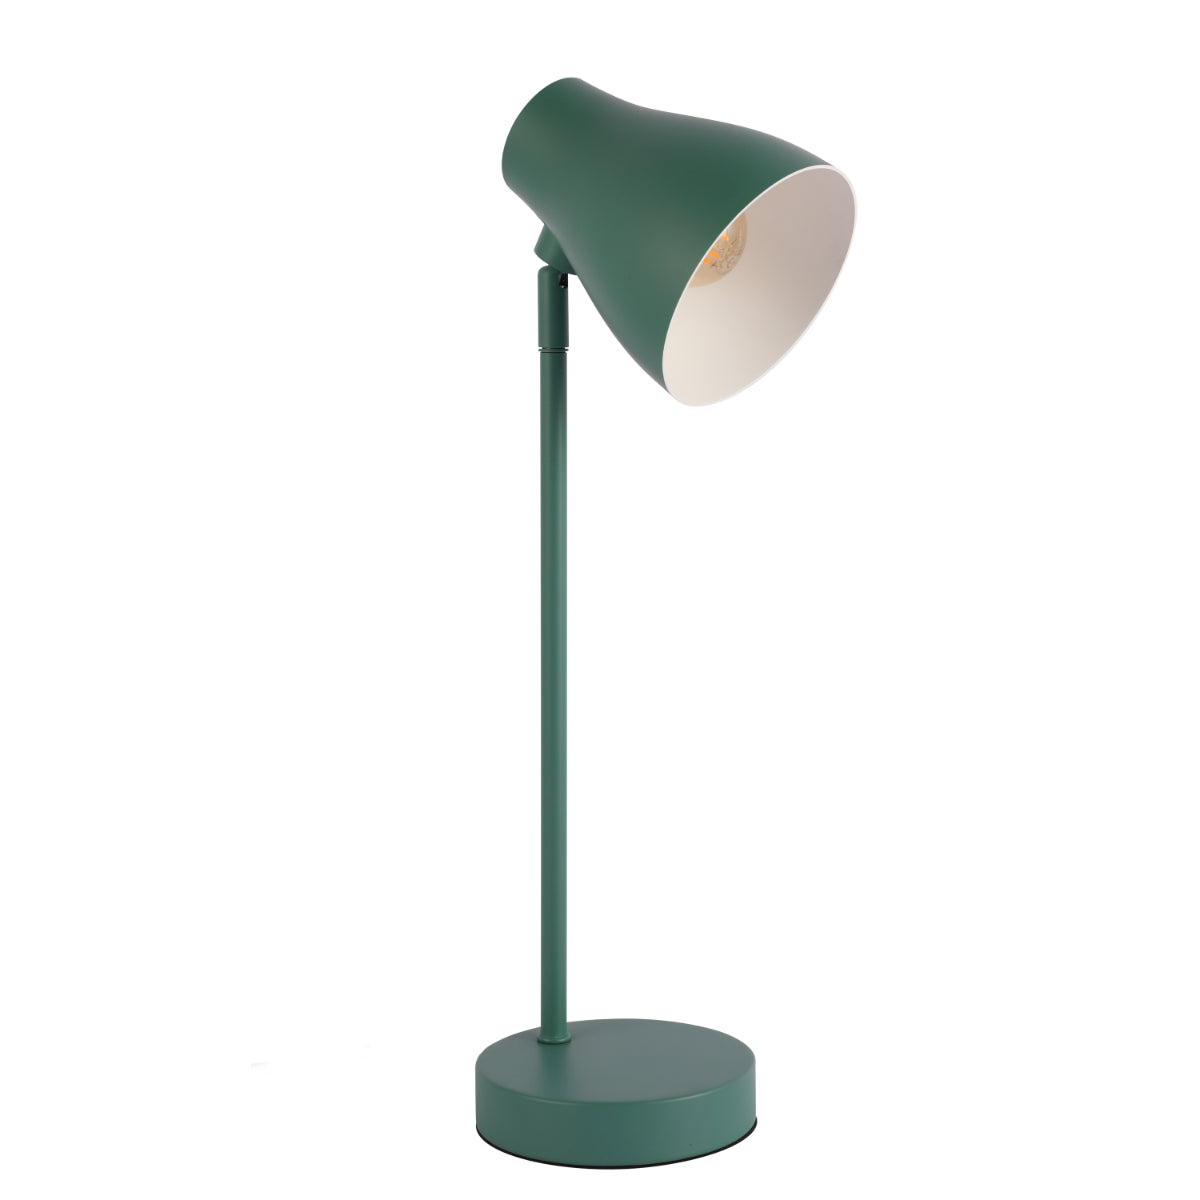 Main image of Elegant Rotatable Desk Lamp in Assorted Colors 130-03654